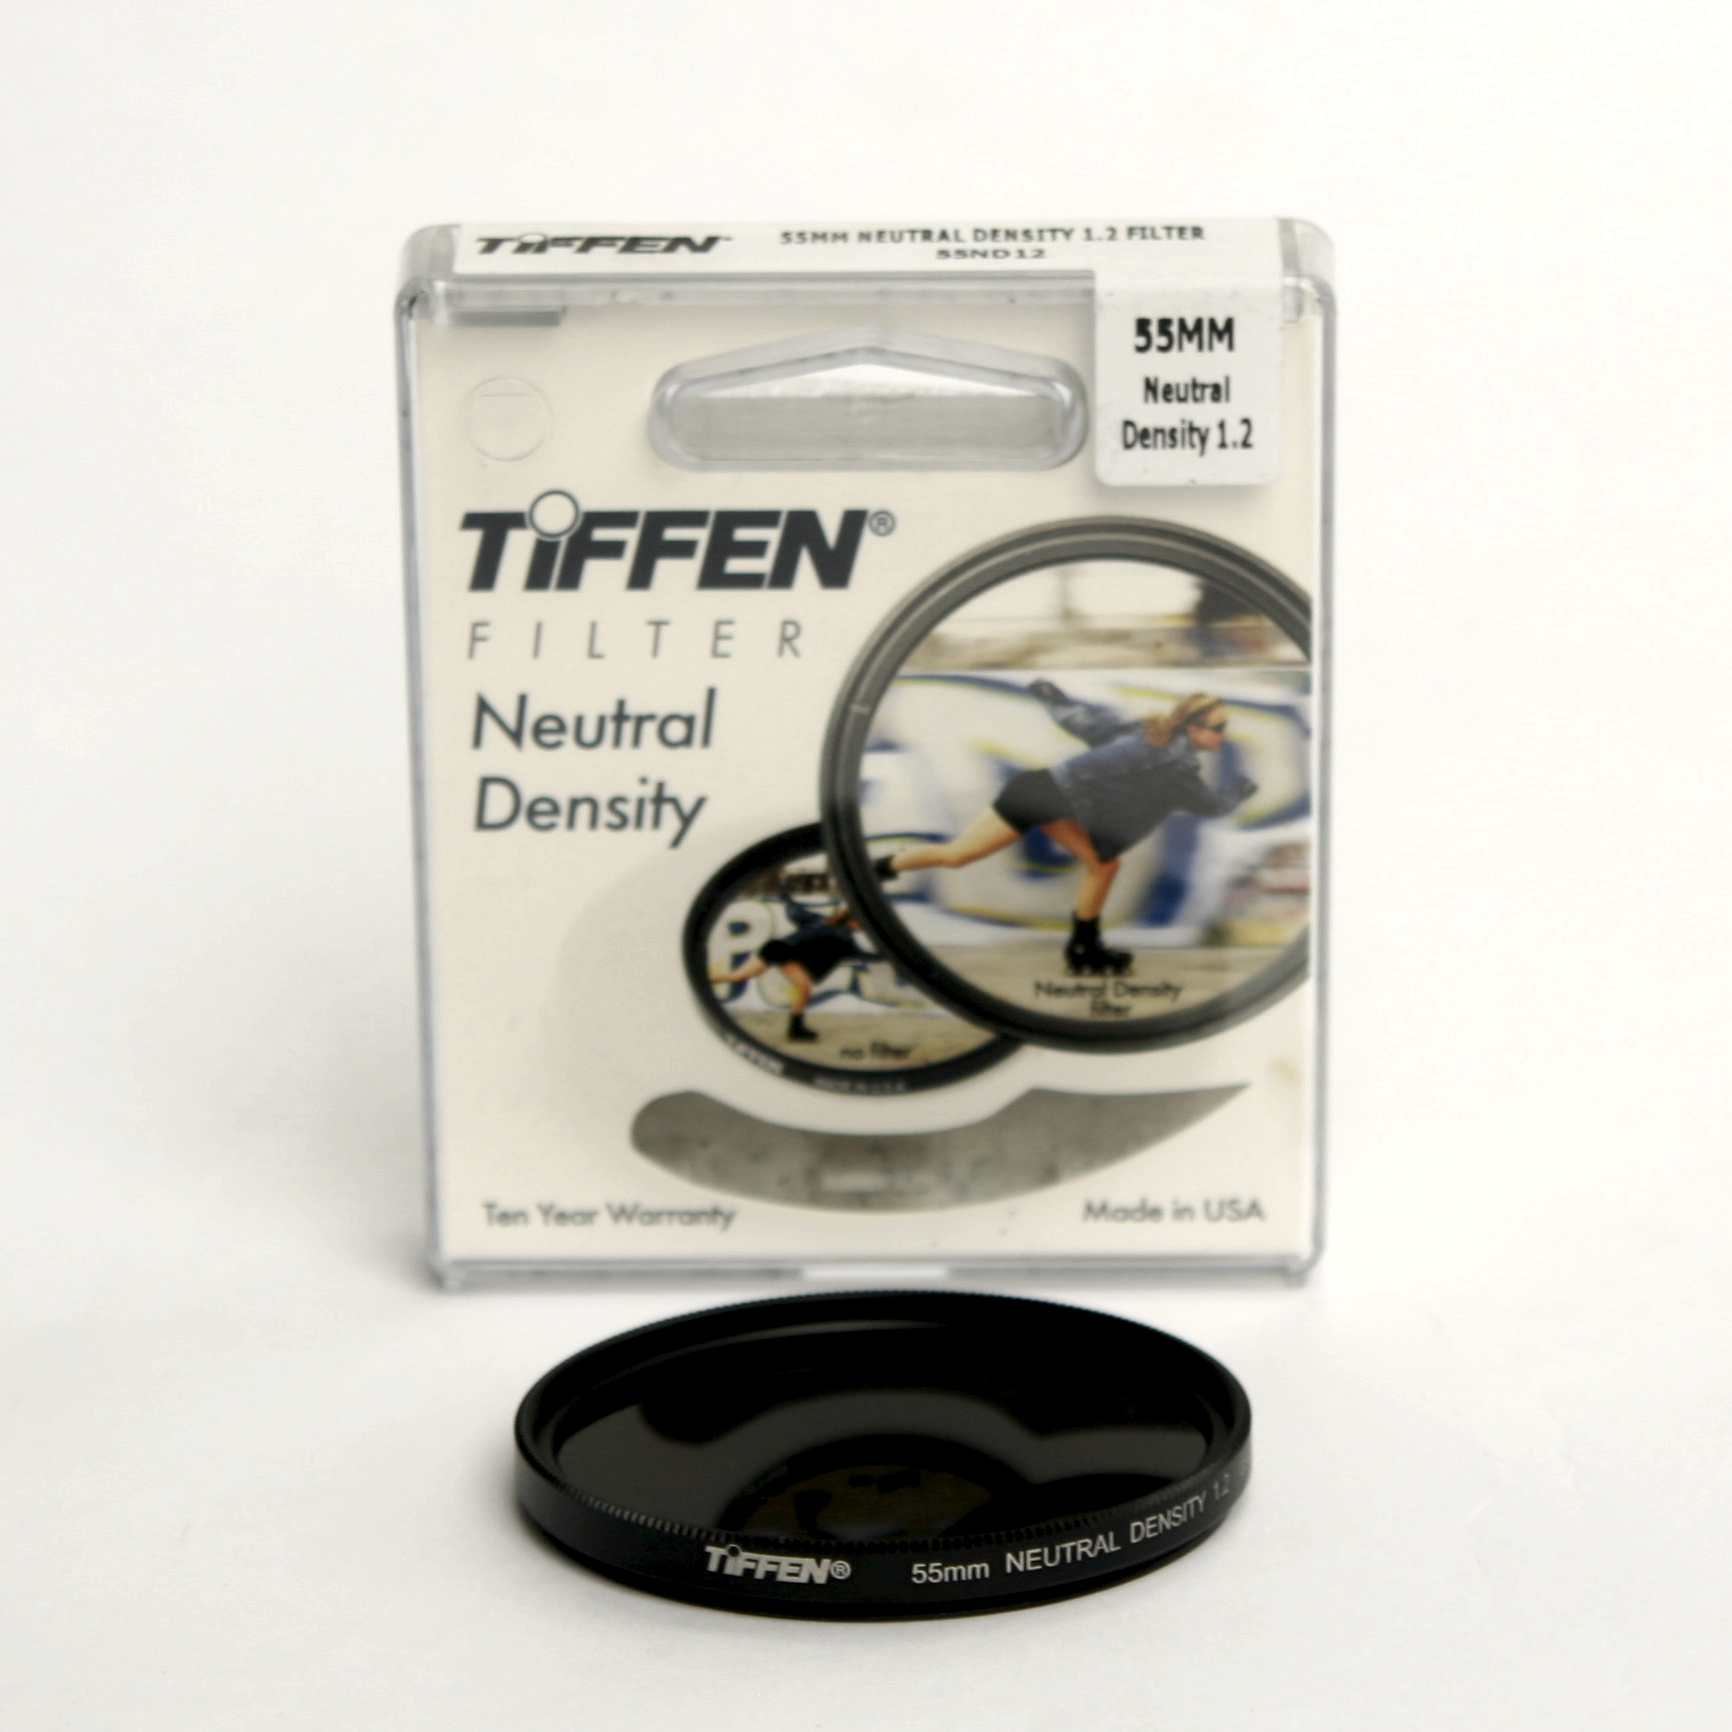 Tiffen 55MM NEUTRAL DENSITY 1.2 (4 Stop) Filter